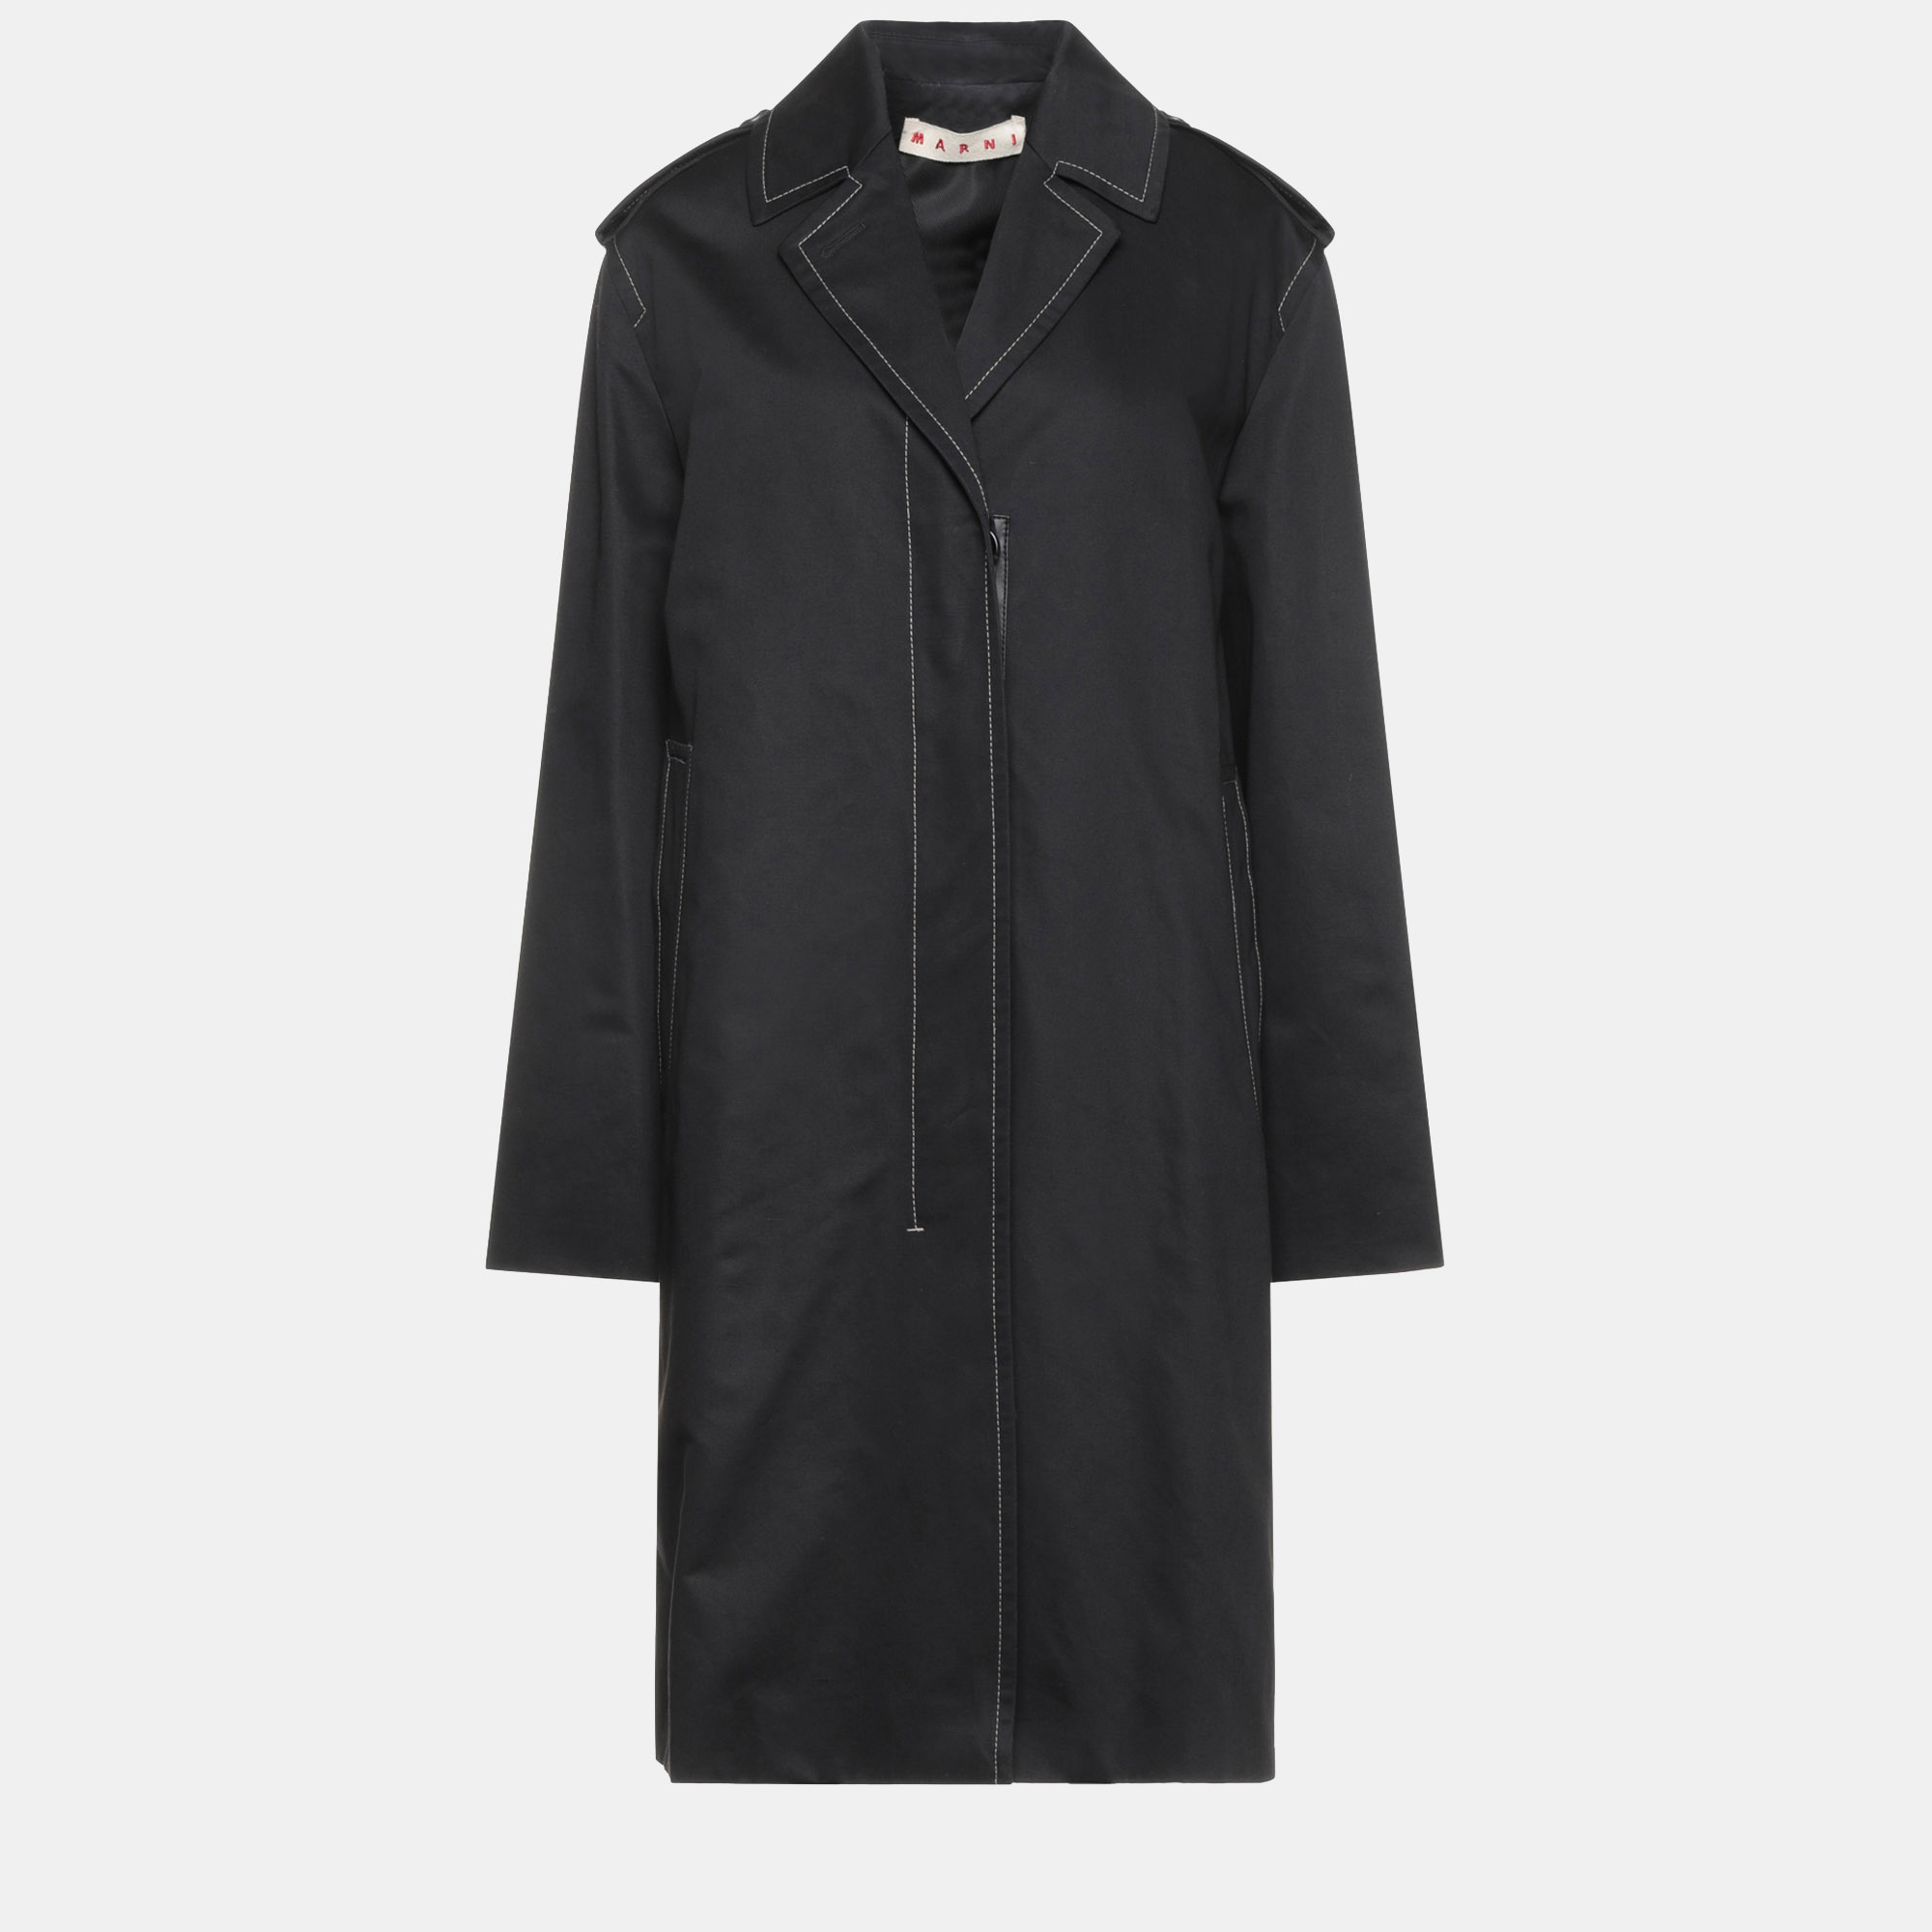 Marni cotton overcoat 38